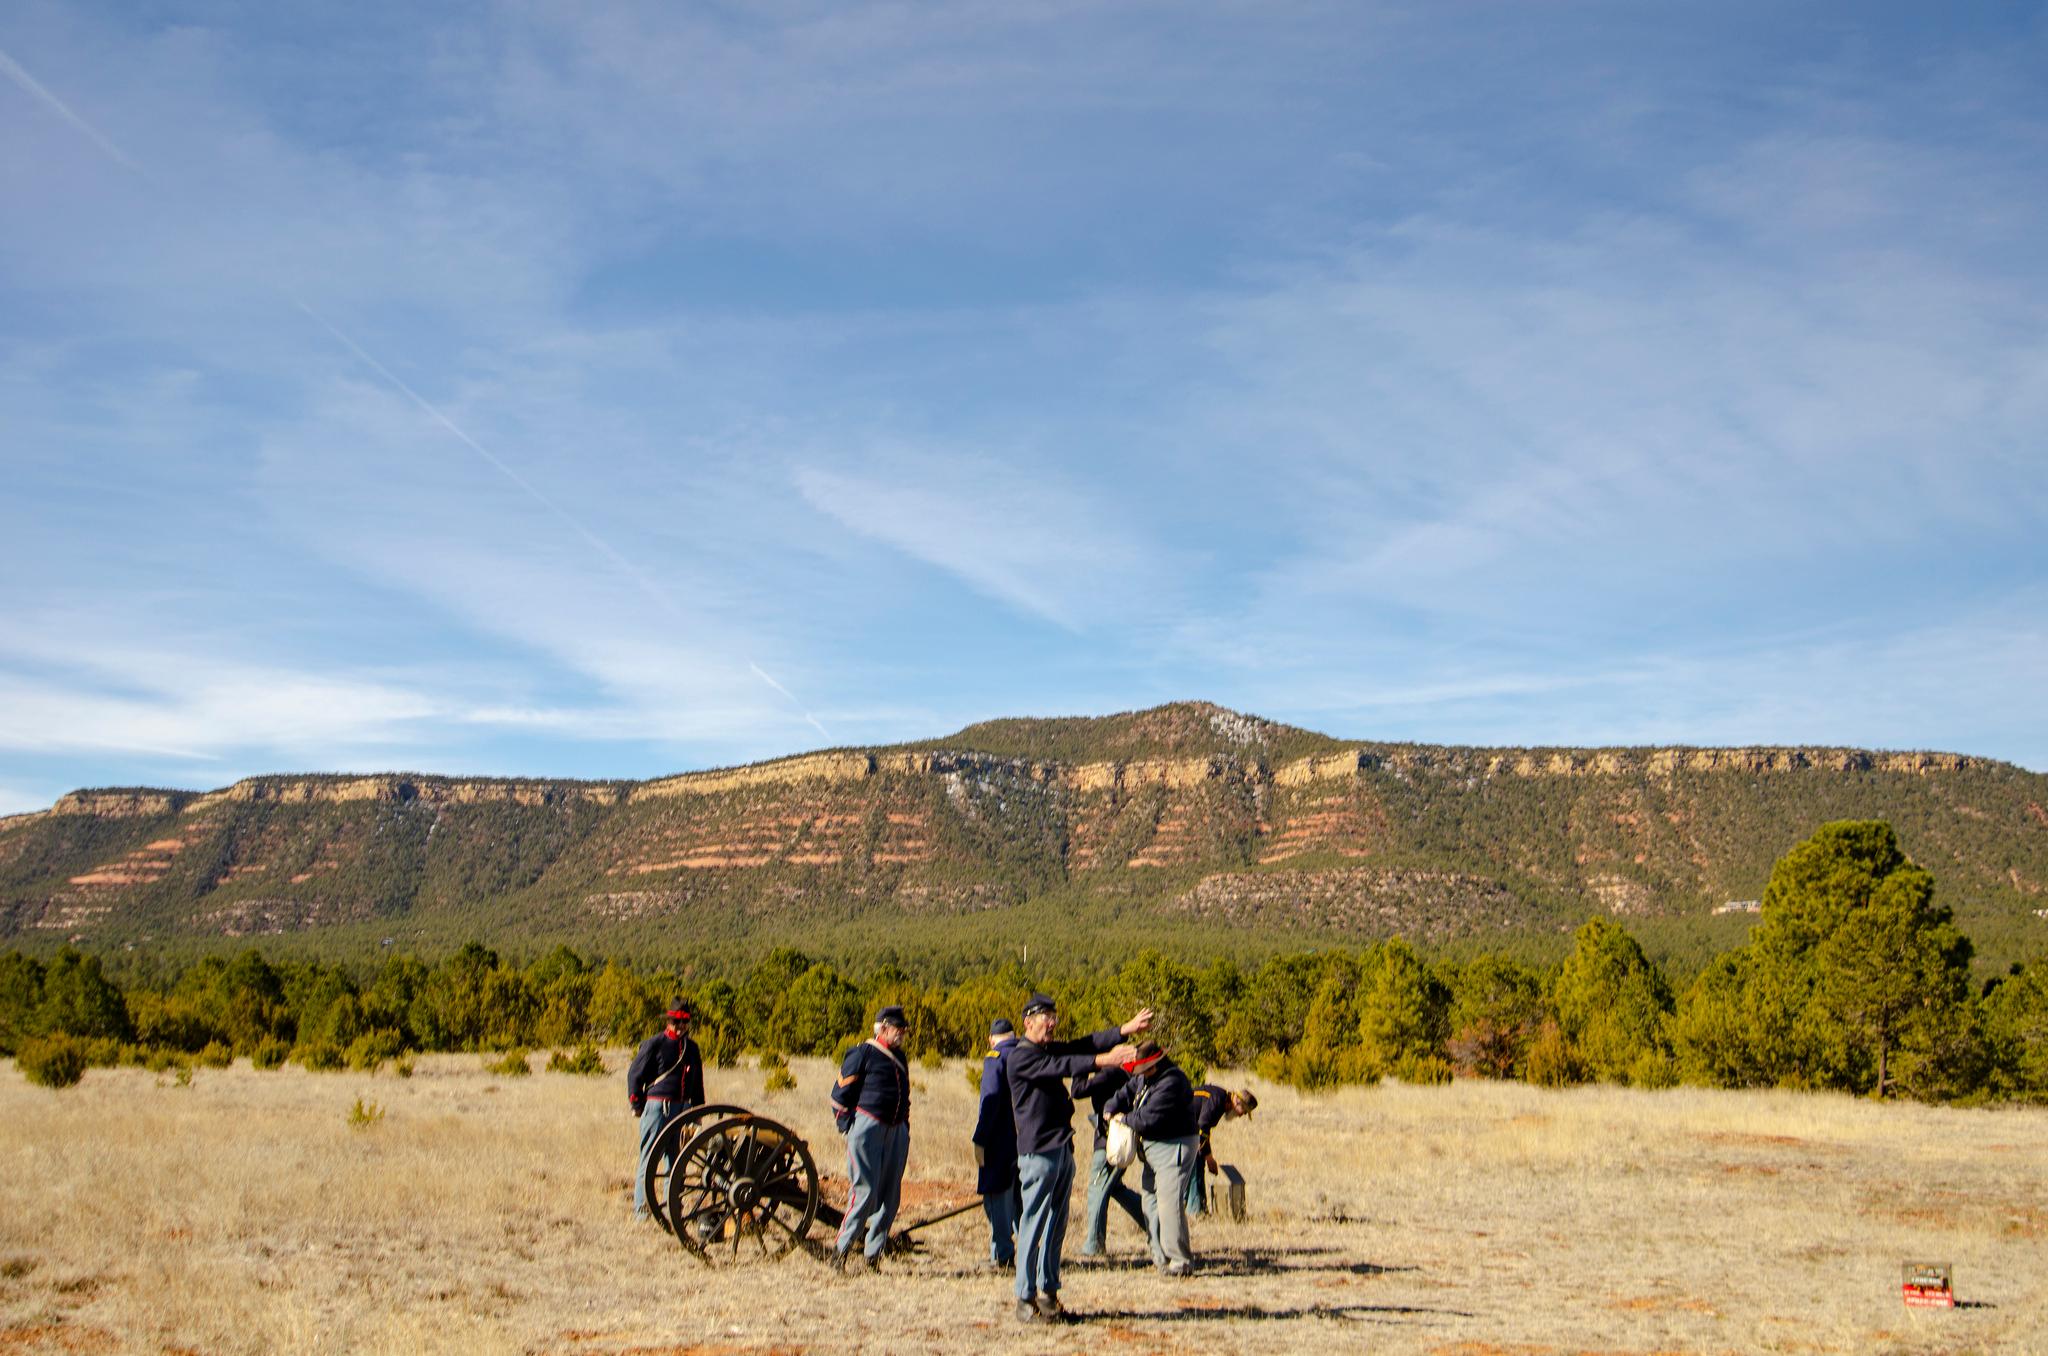 Reenactors prepare a cannon under a mesa and blue skies.